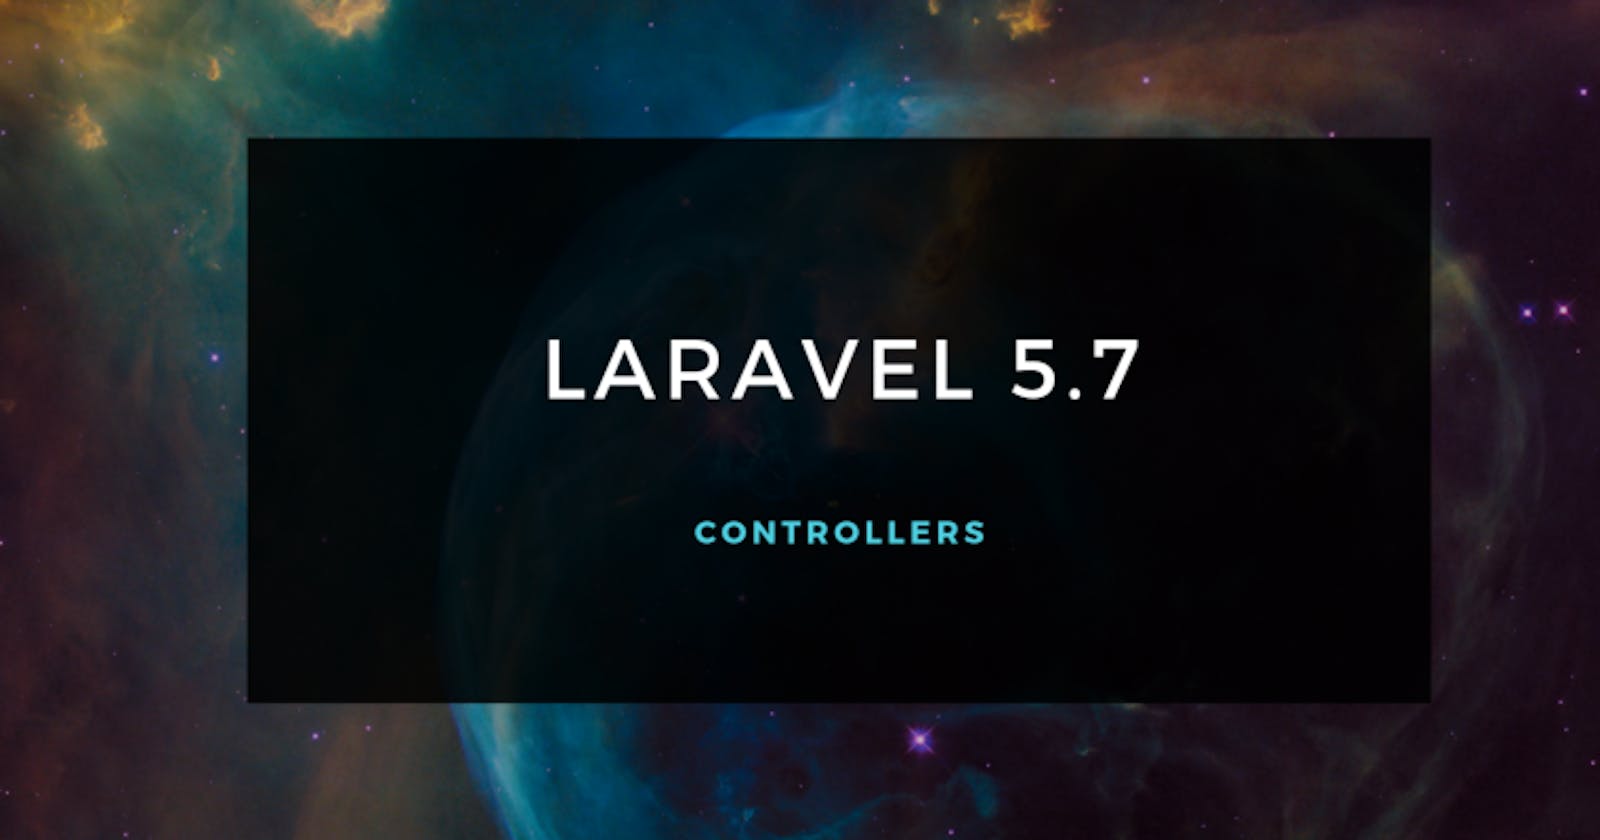 Laravel 5.7 — Controllers